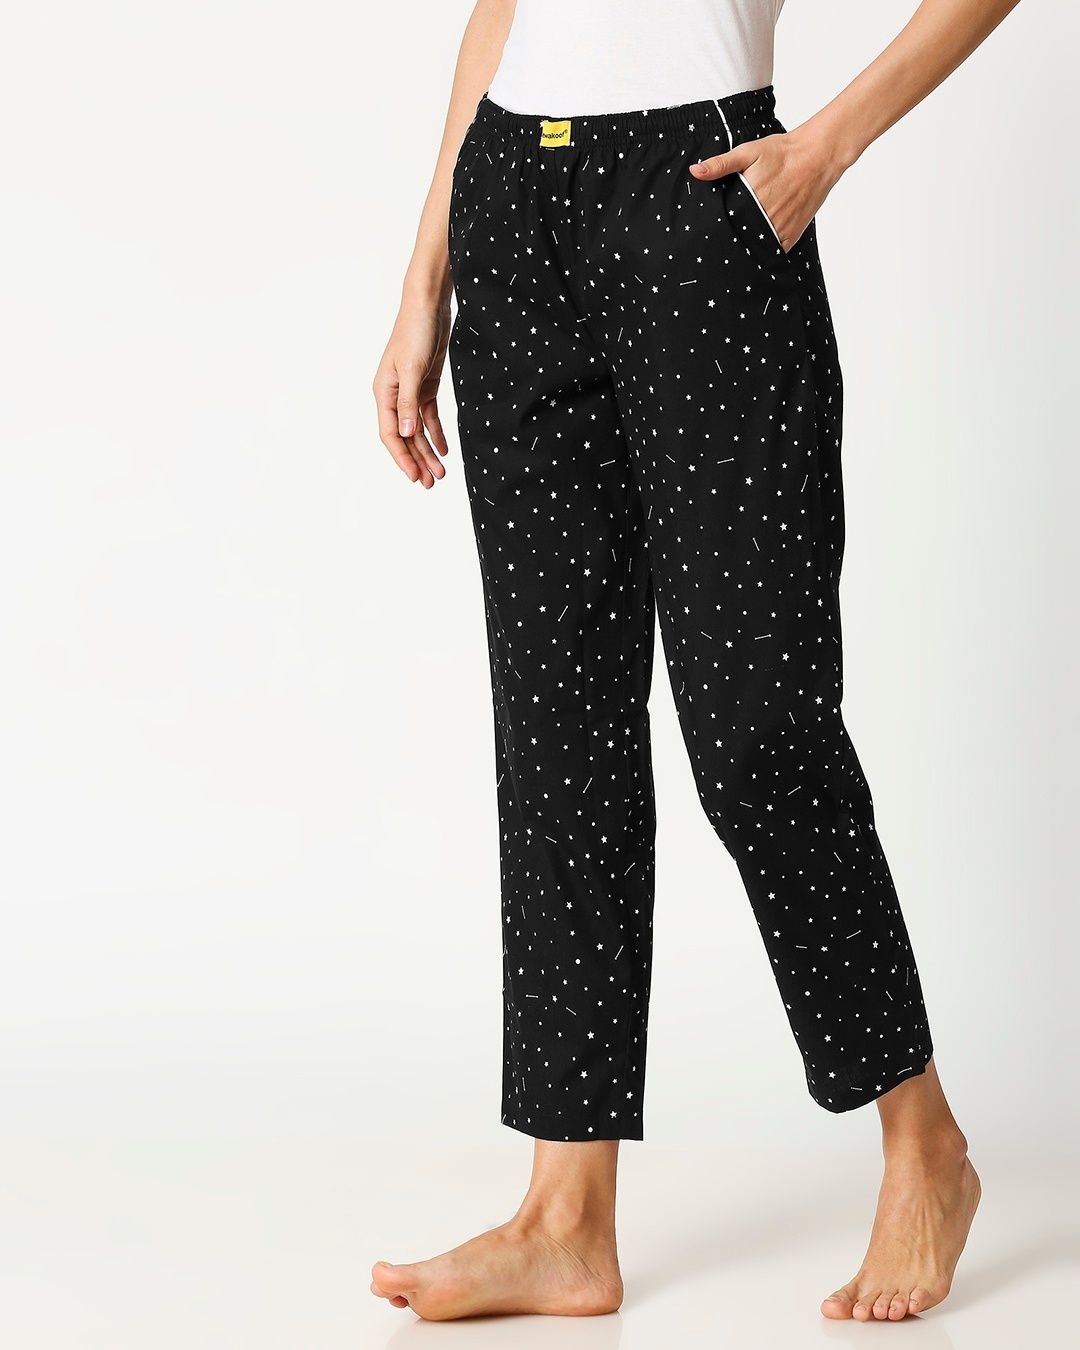 Shop Starry Galaxy All Over Printed Pyjama-Design